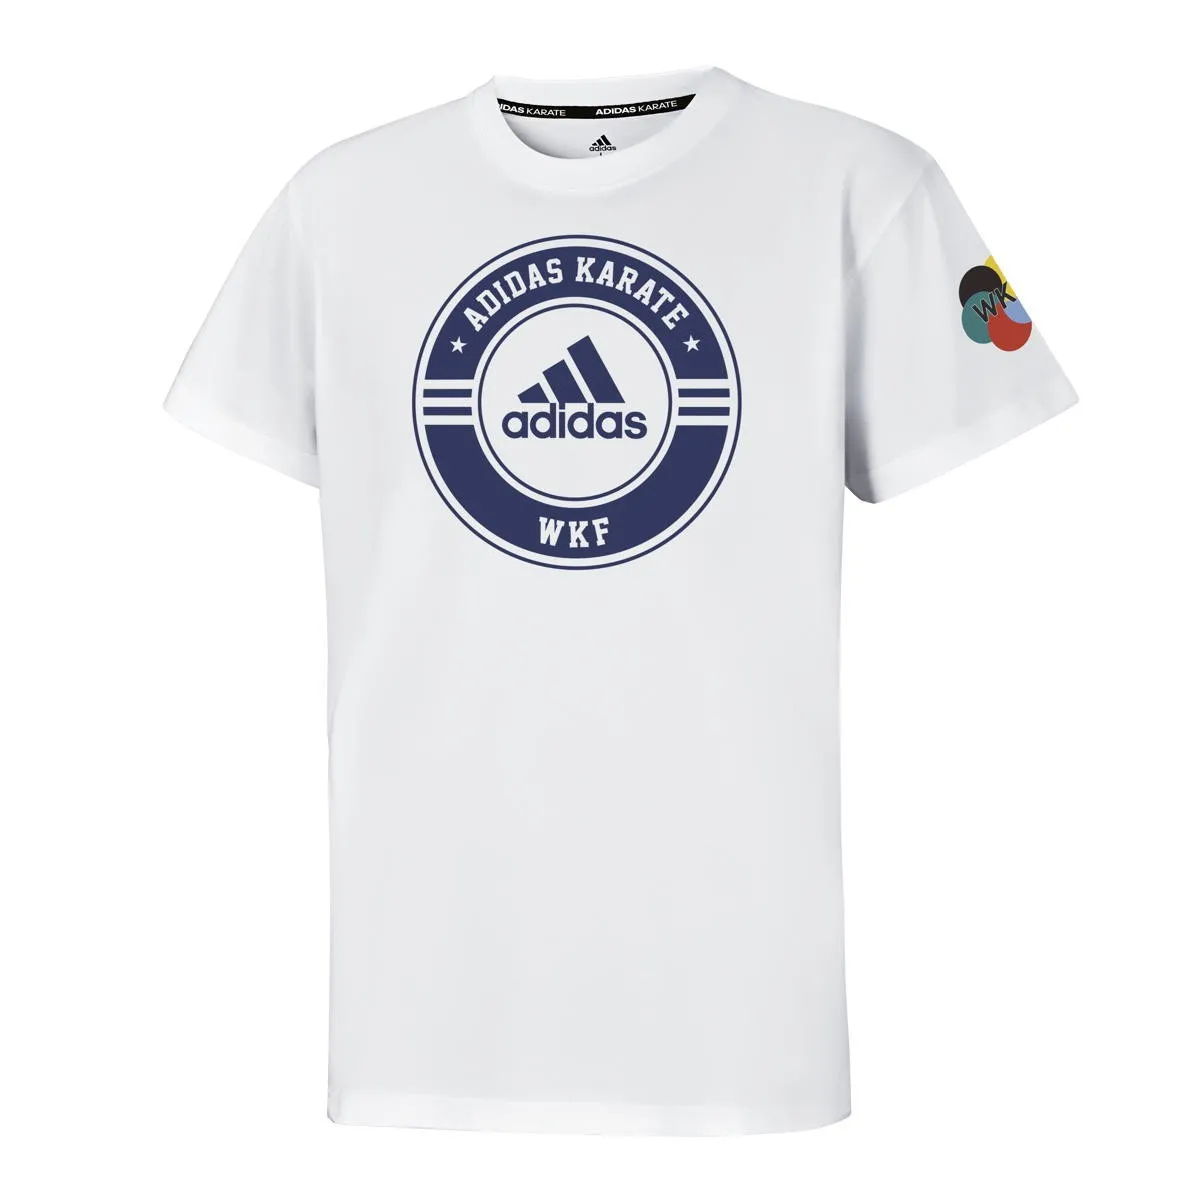 adidas WKF Karate T-shirt hvid World Karate Federation